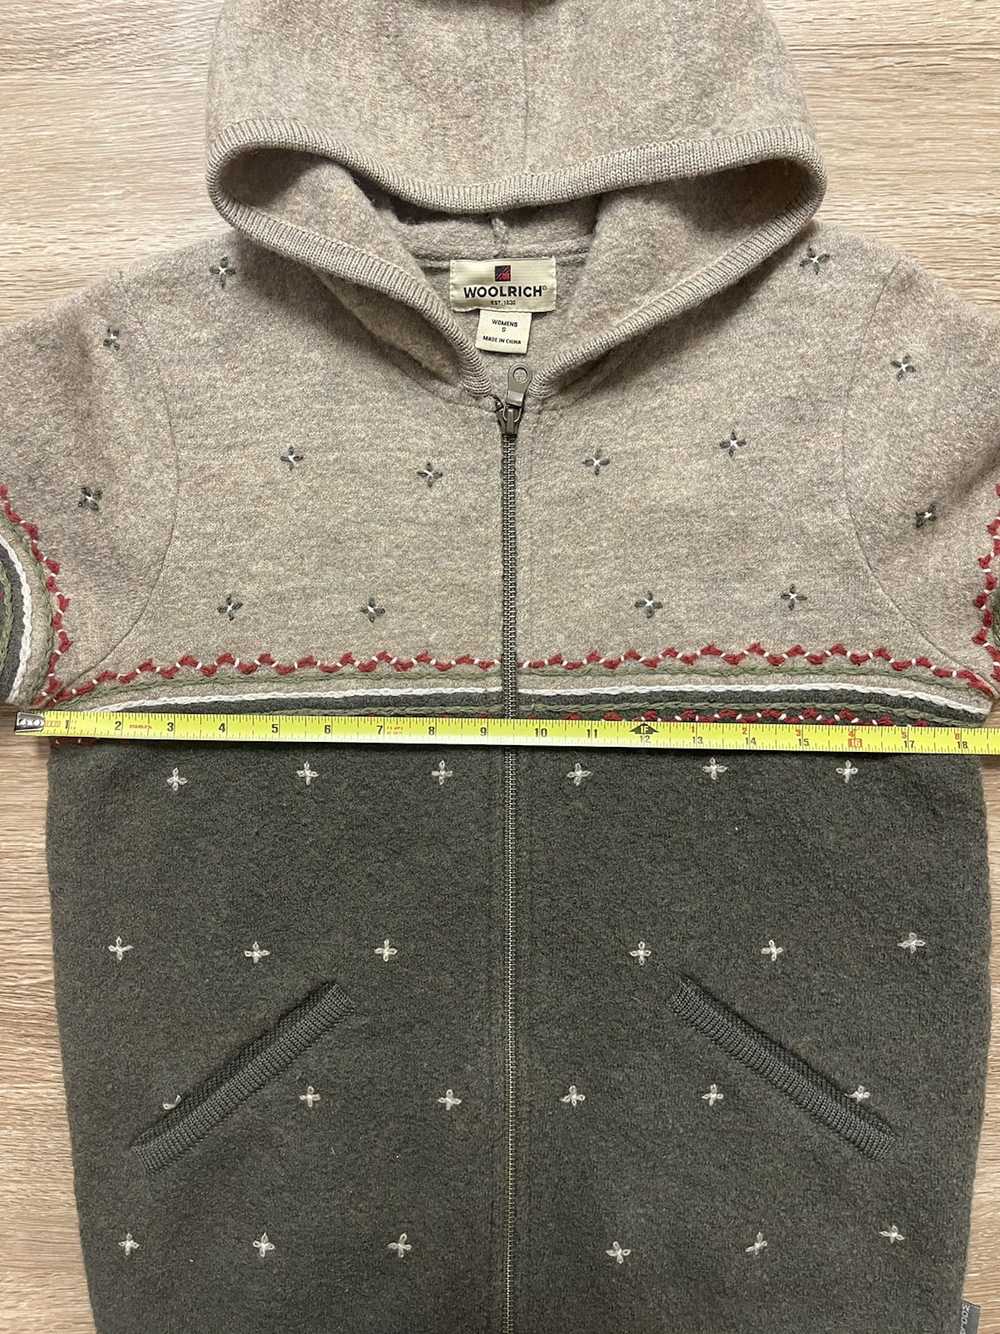 Vintage × Woolrich Woolen Mills Zip Up Jacket wit… - image 7